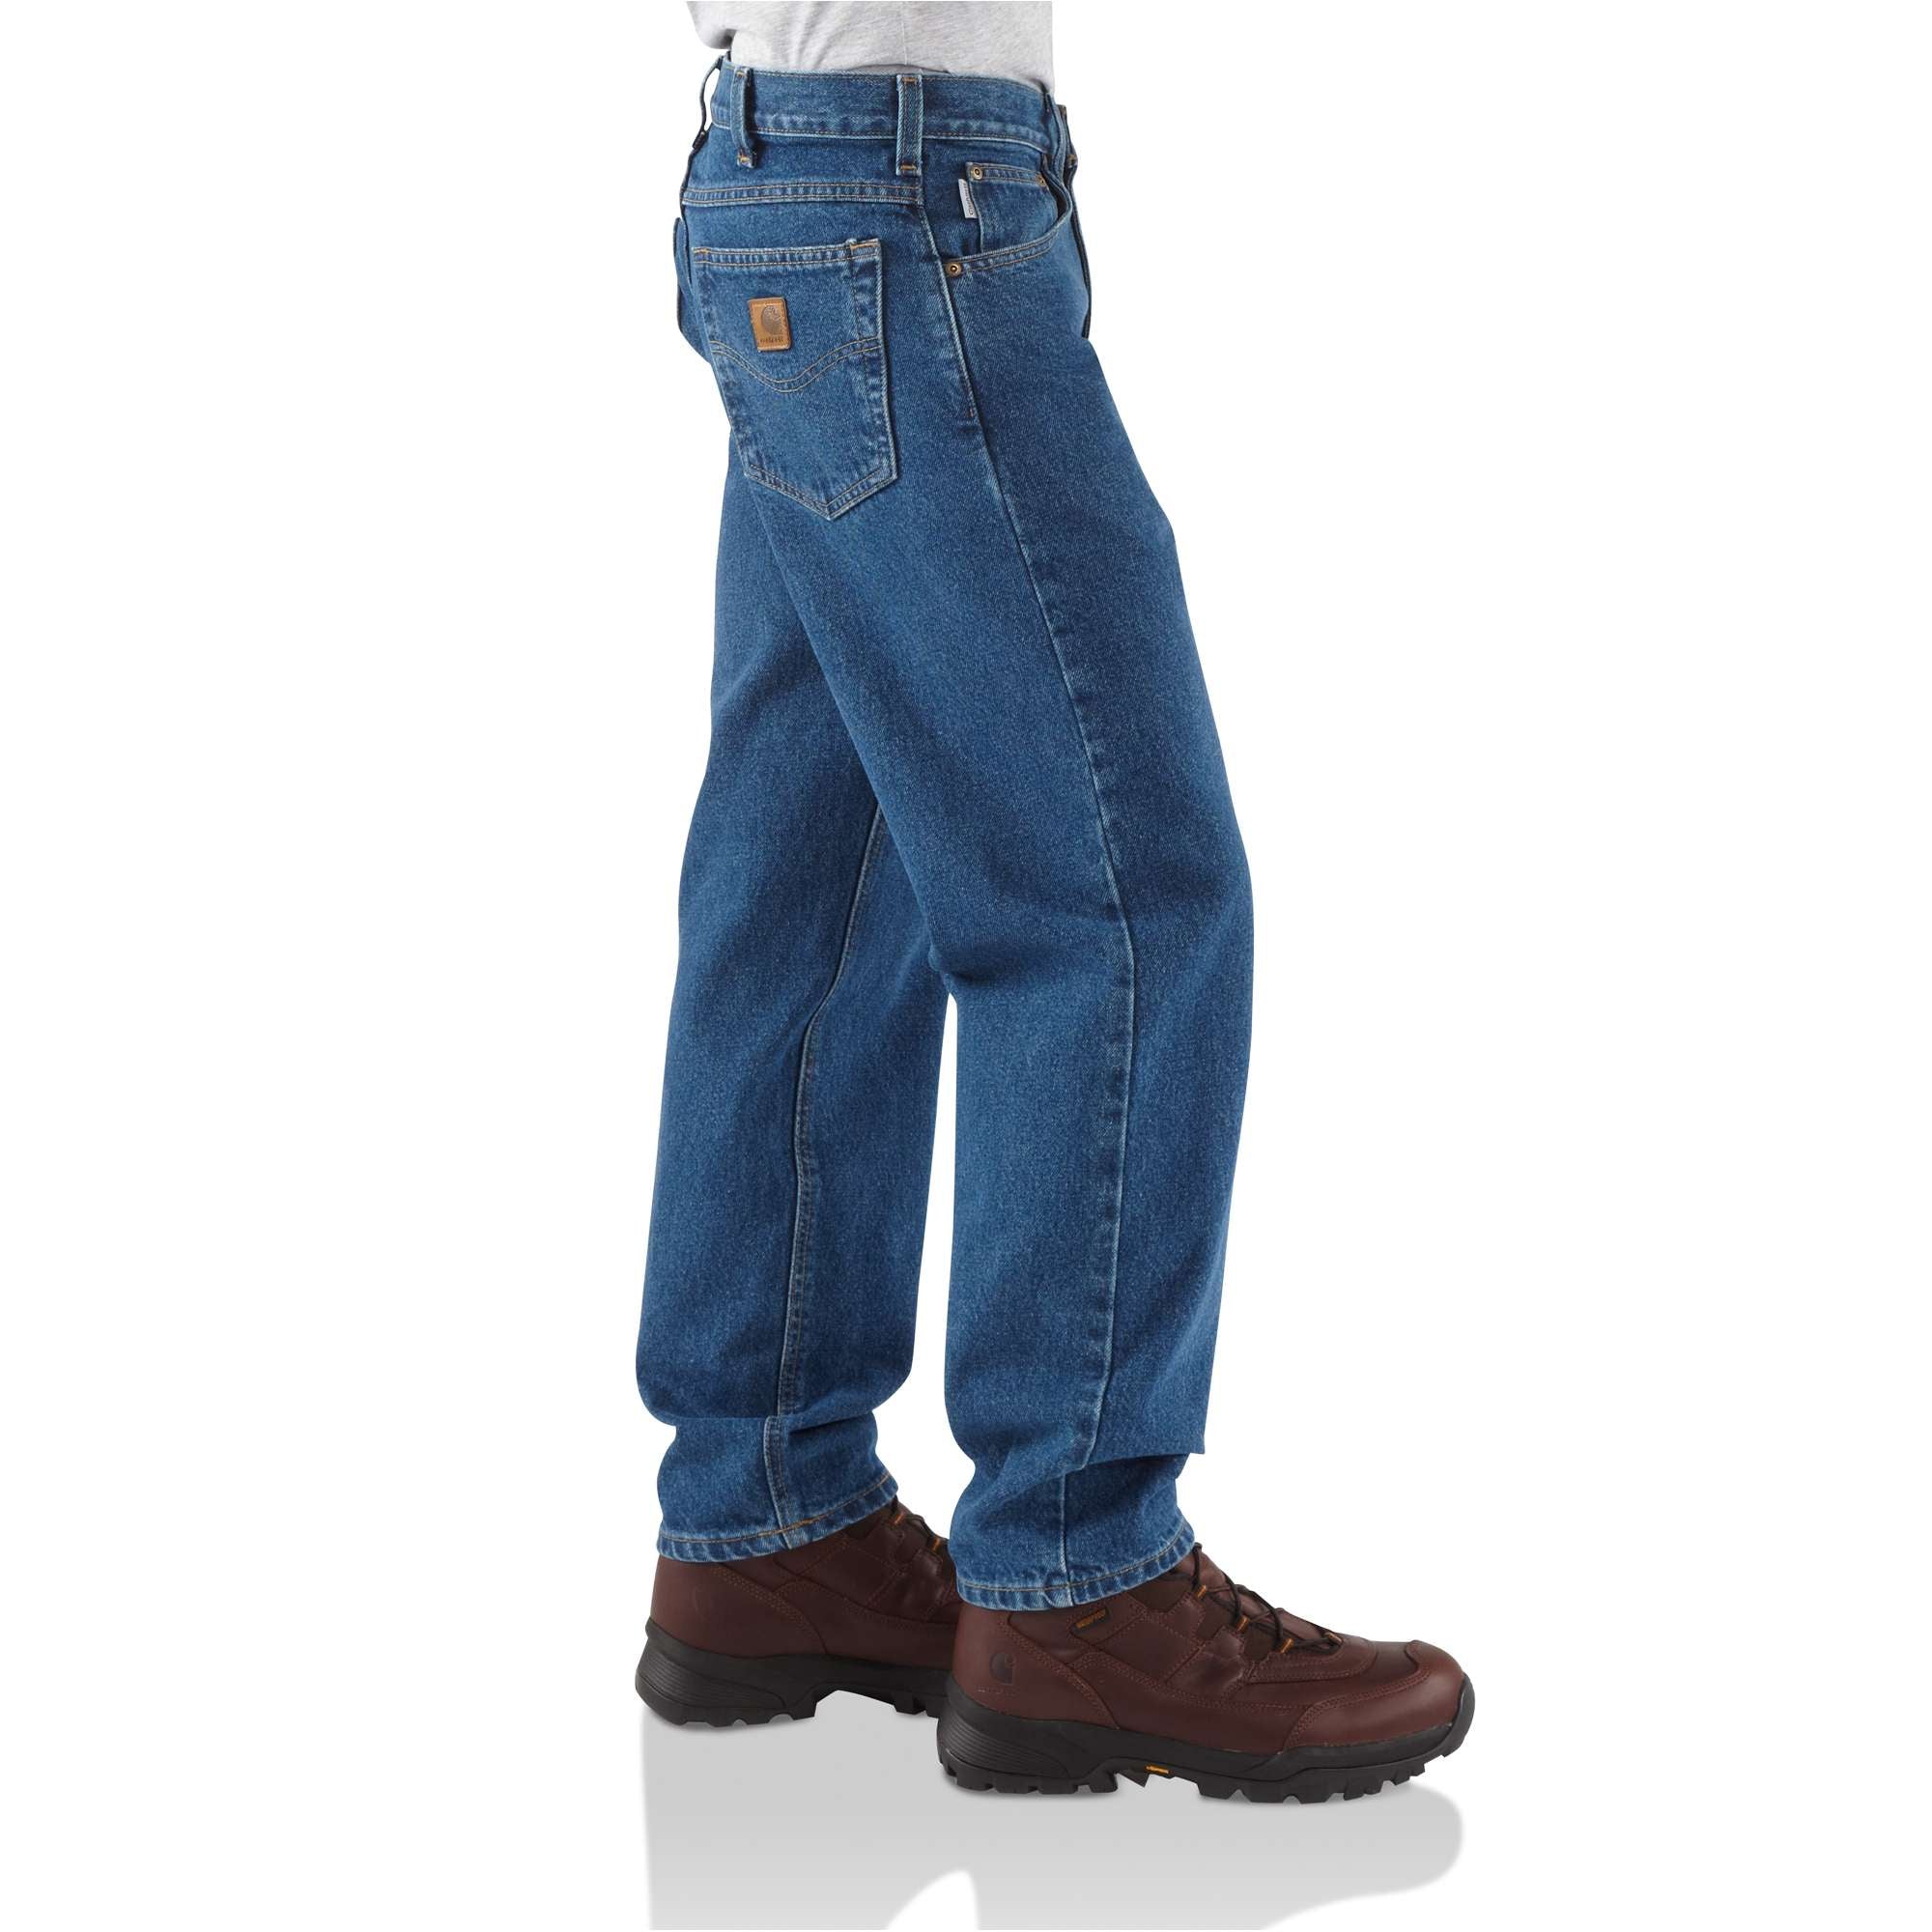 Carhartt jeans pants mens - Gem